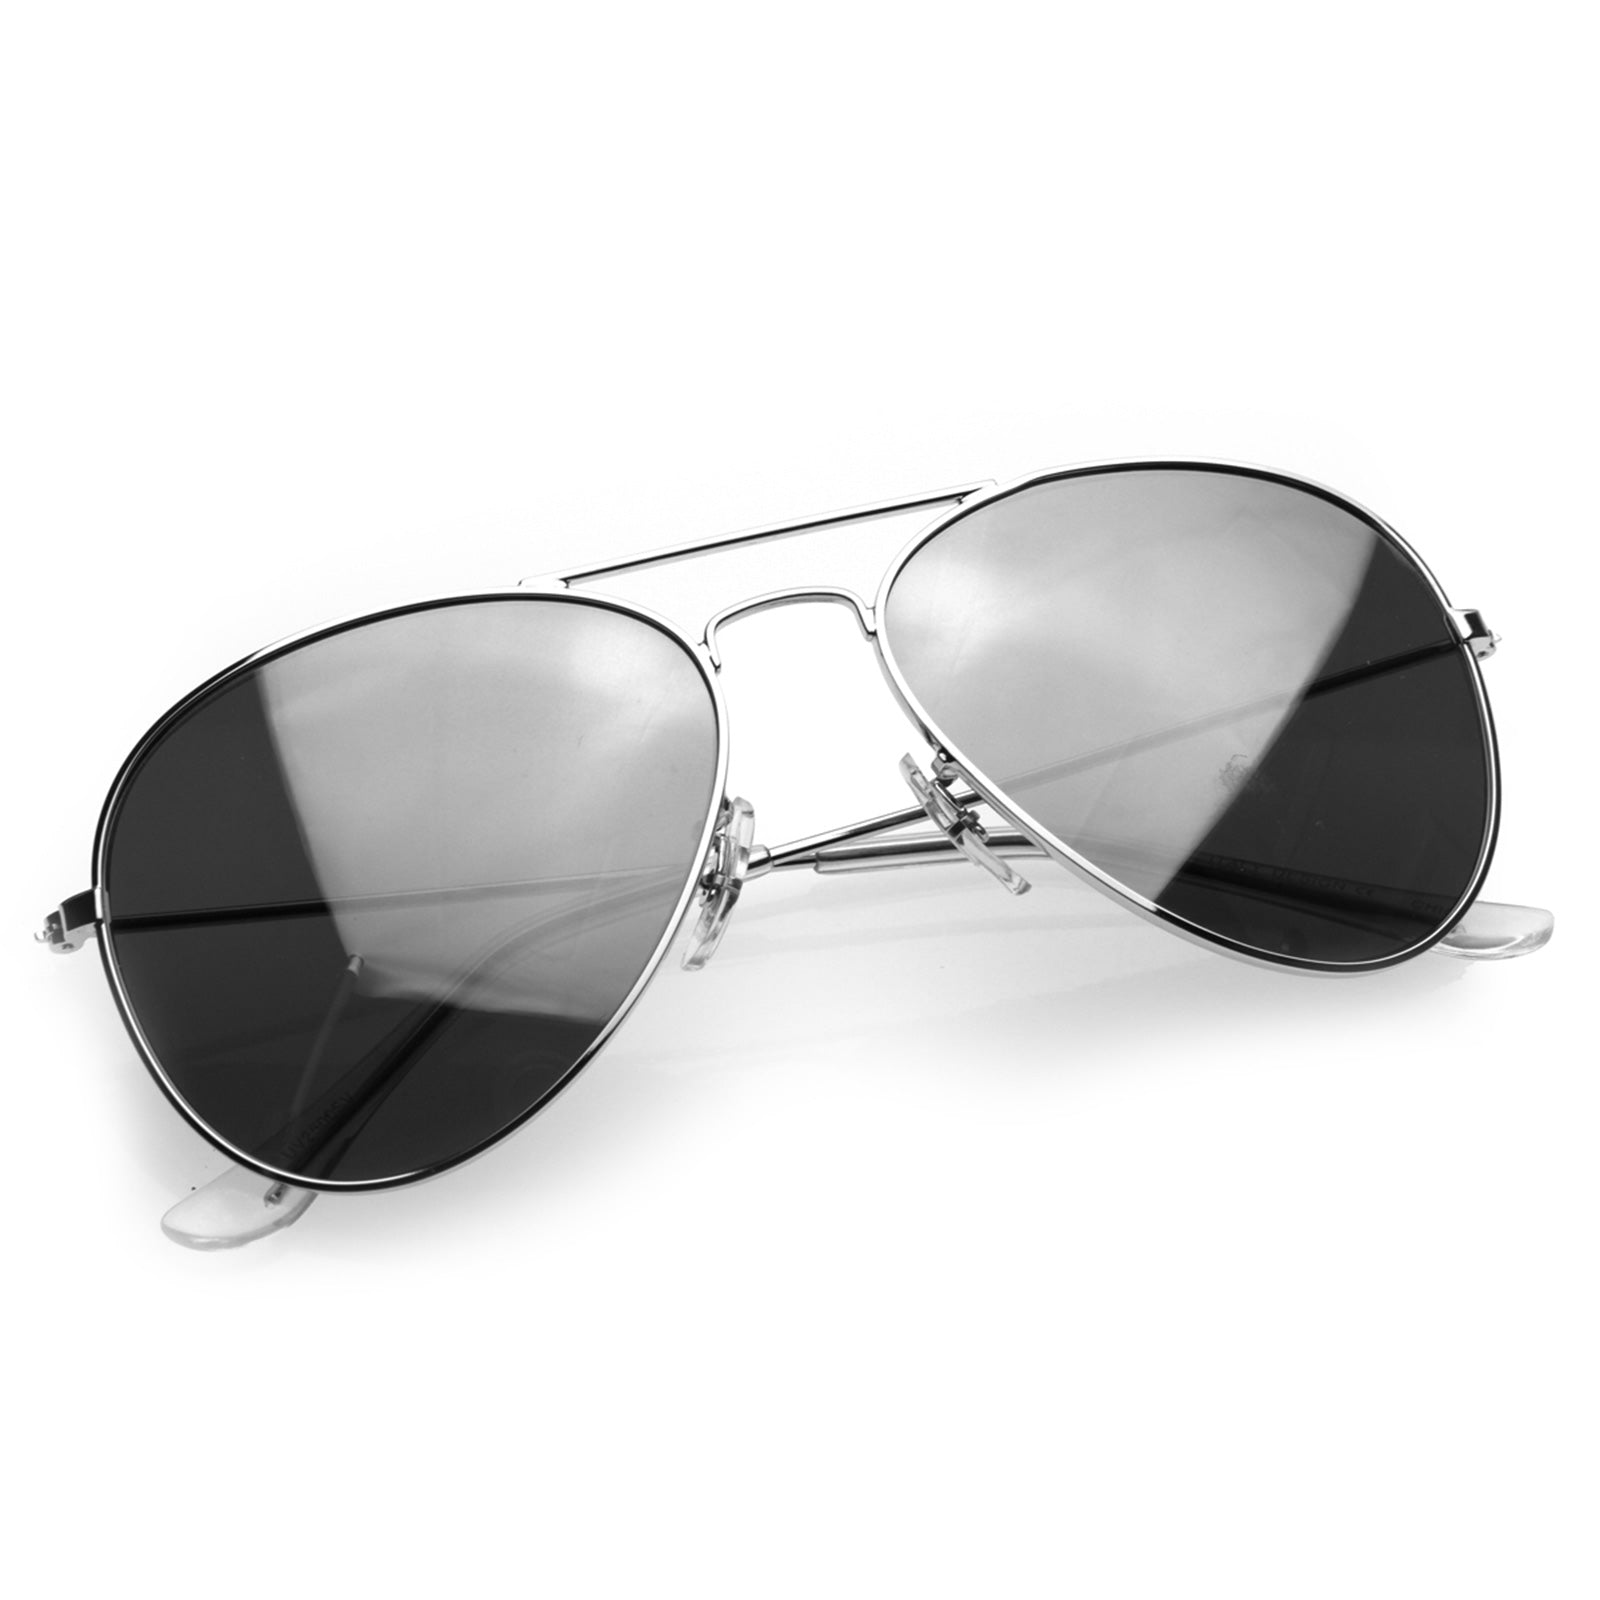 Mirrored Aviators Silver Metal Sunglasses Aviator